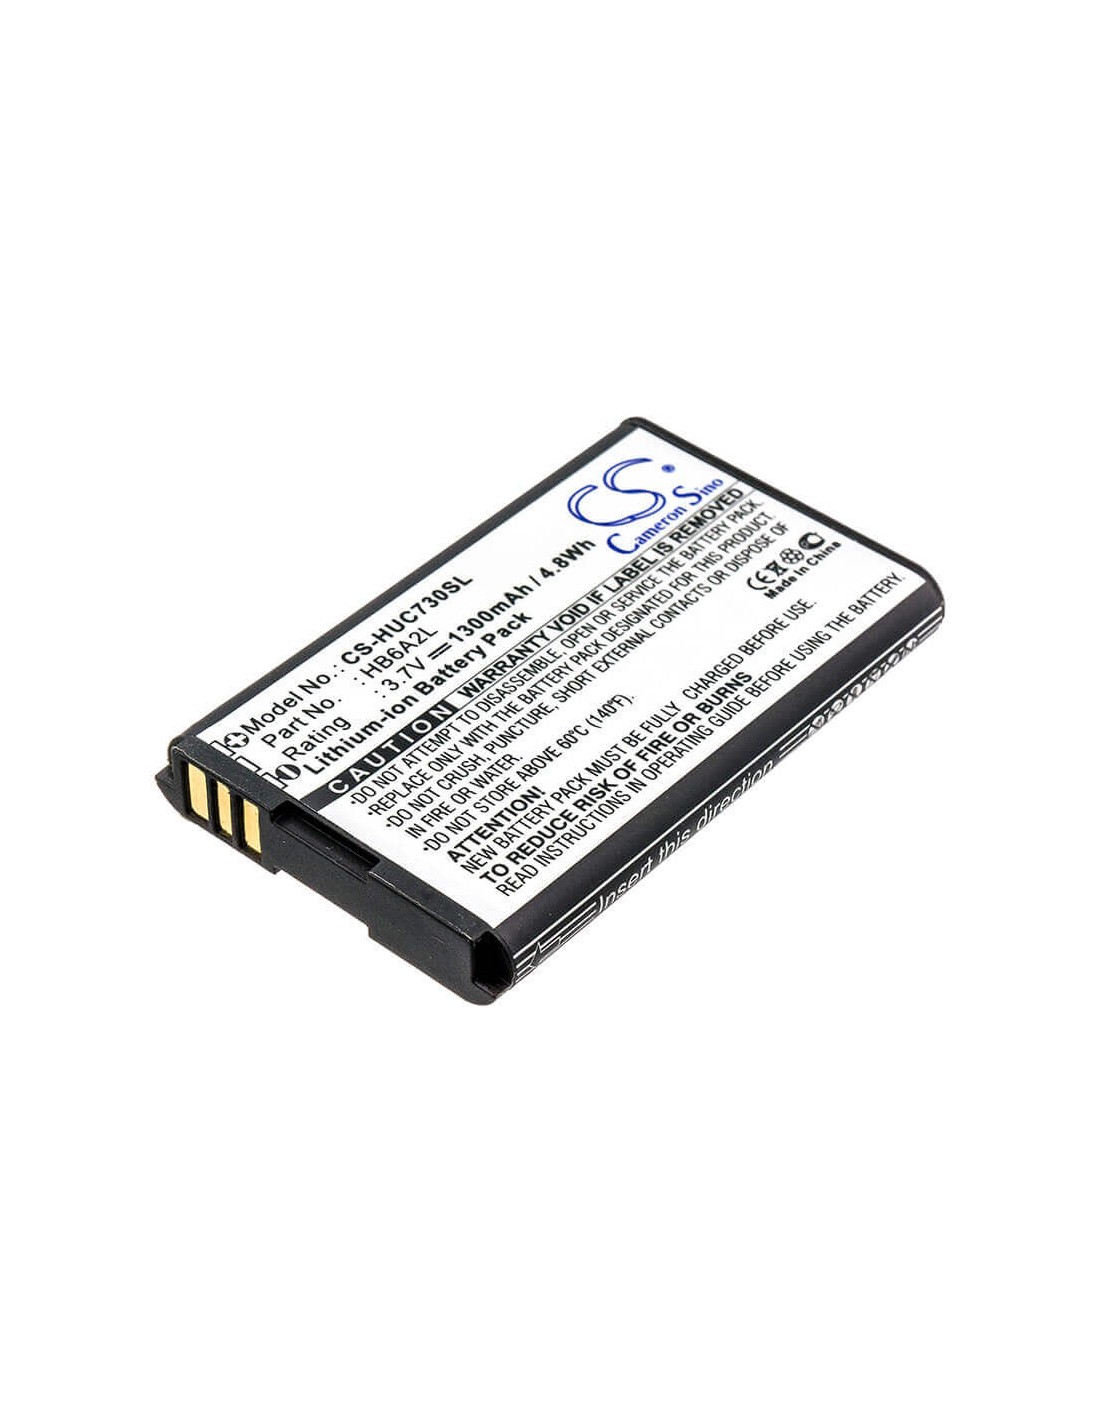 Battery for Huawei C7300, C7189, C2823 3.7V, 1300mAh - 4.81Wh